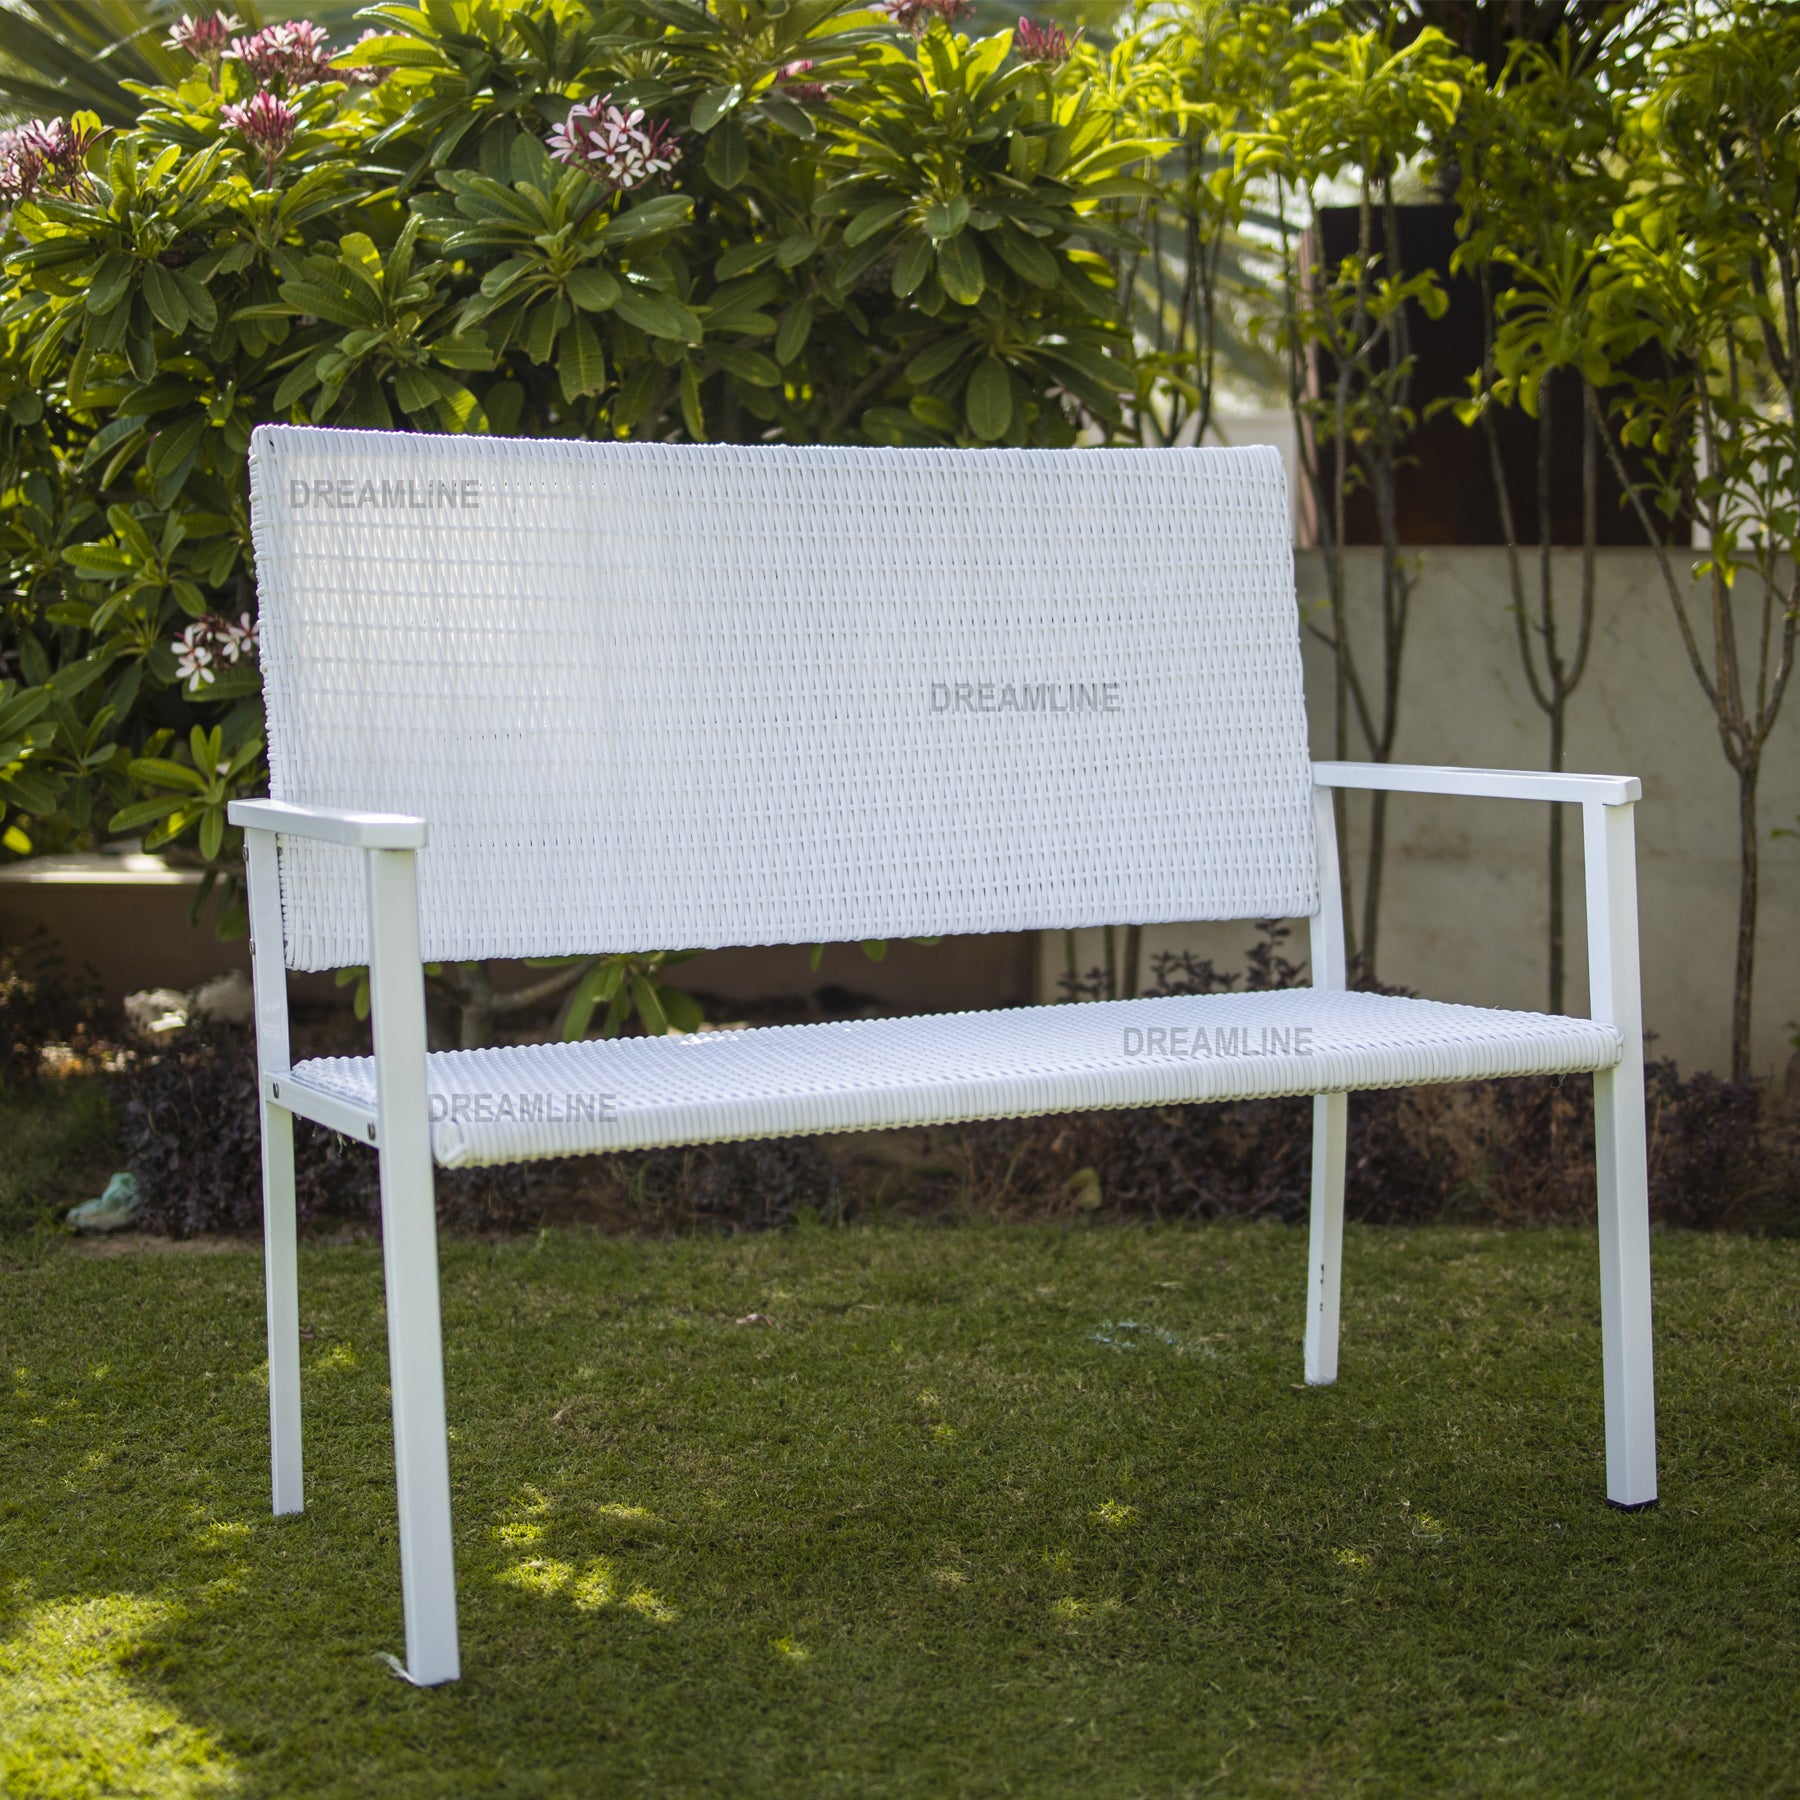 Bolton Wicker 2 Seater Garden Bench for Indoor & Outdoor Park - (White)